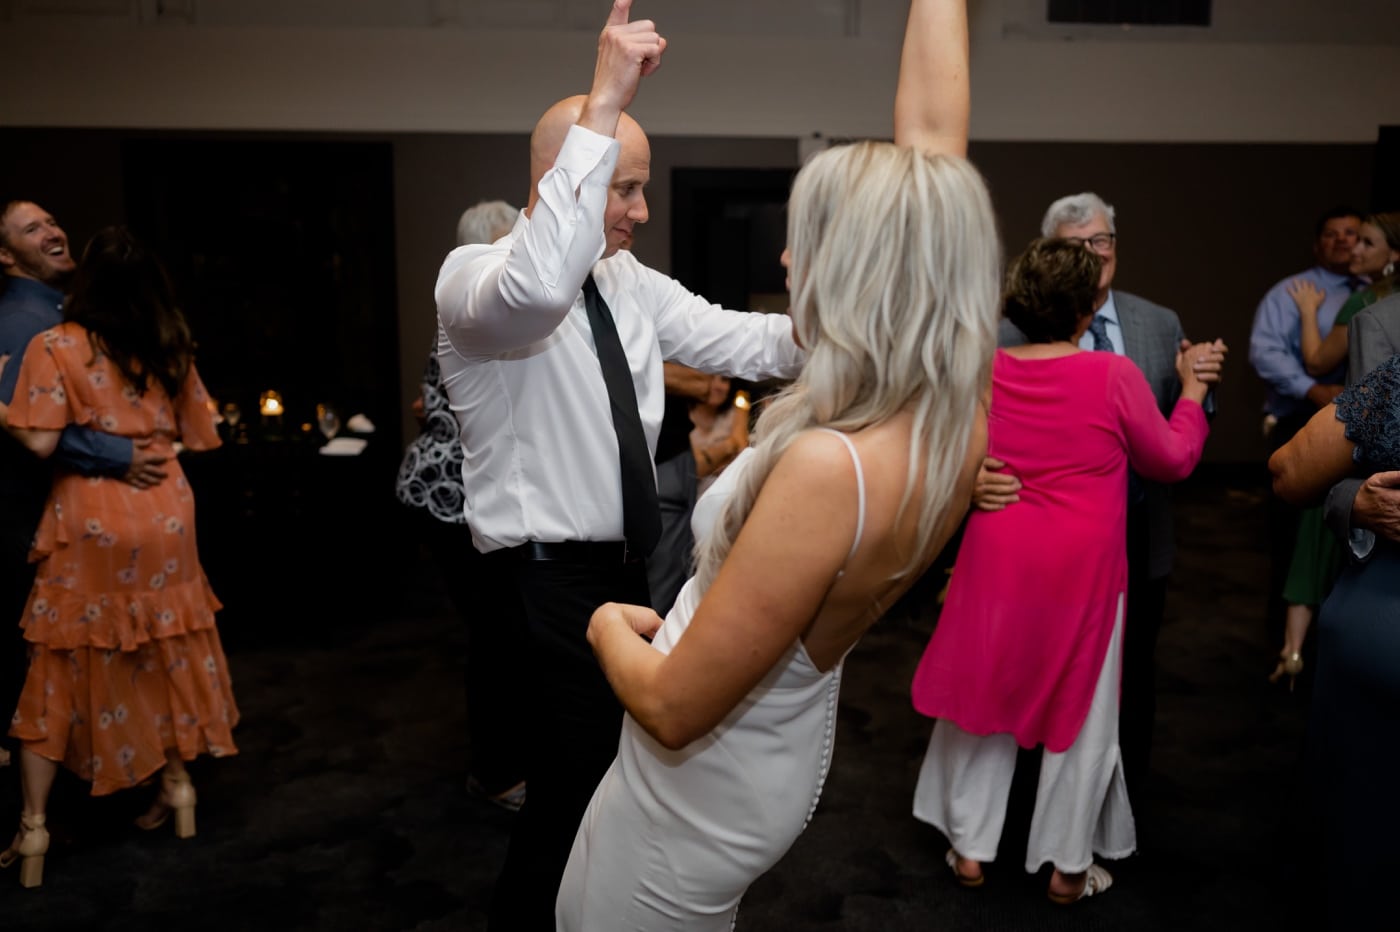 54 bride and groom dancing at surety hotel wedding reception